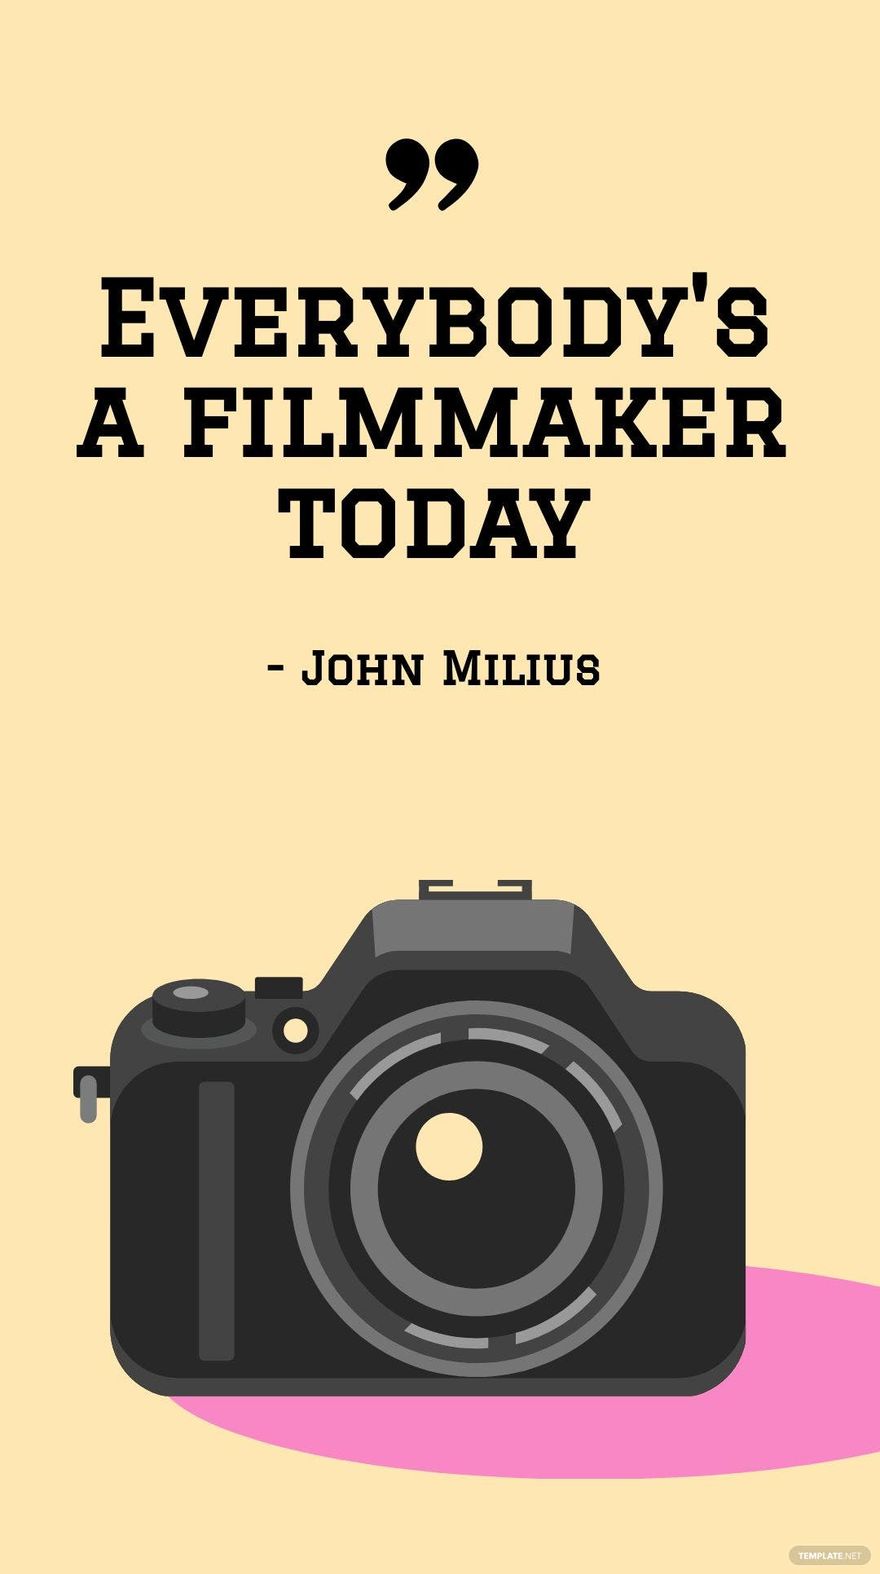 John Milius - Everybody's a filmmaker today in JPG